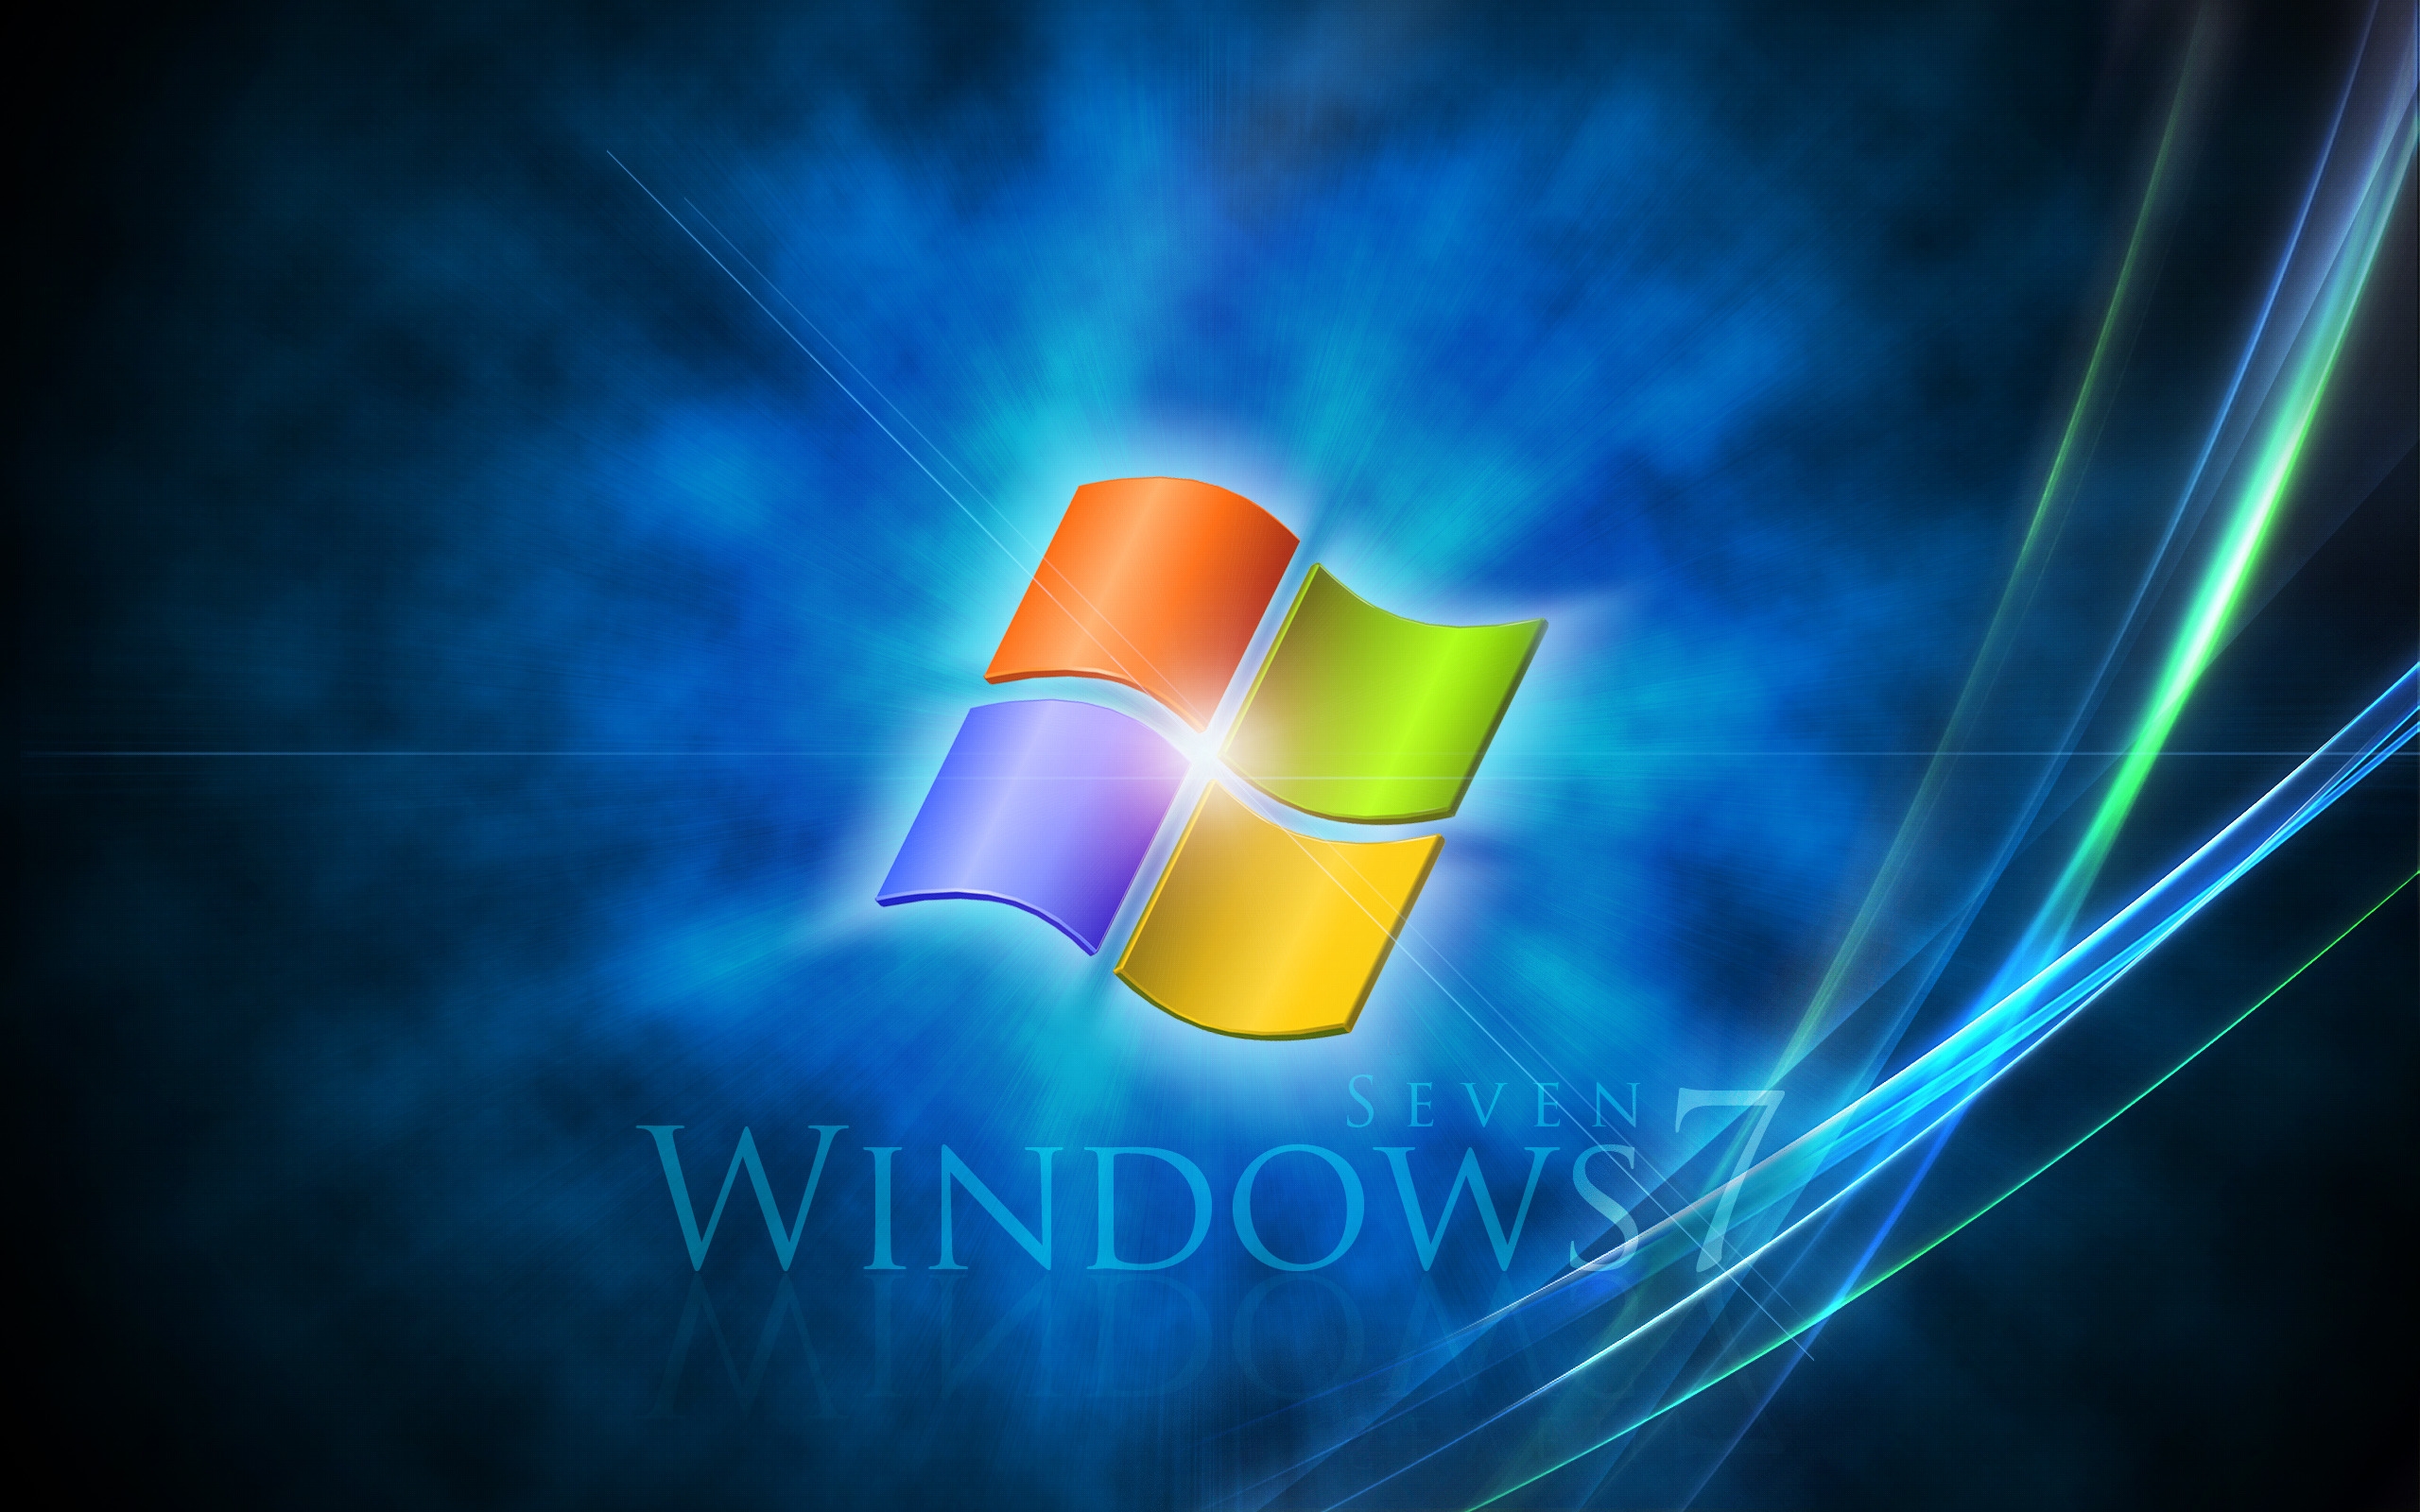 Windows 7 Light Rays for 2560 x 1600 widescreen resolution